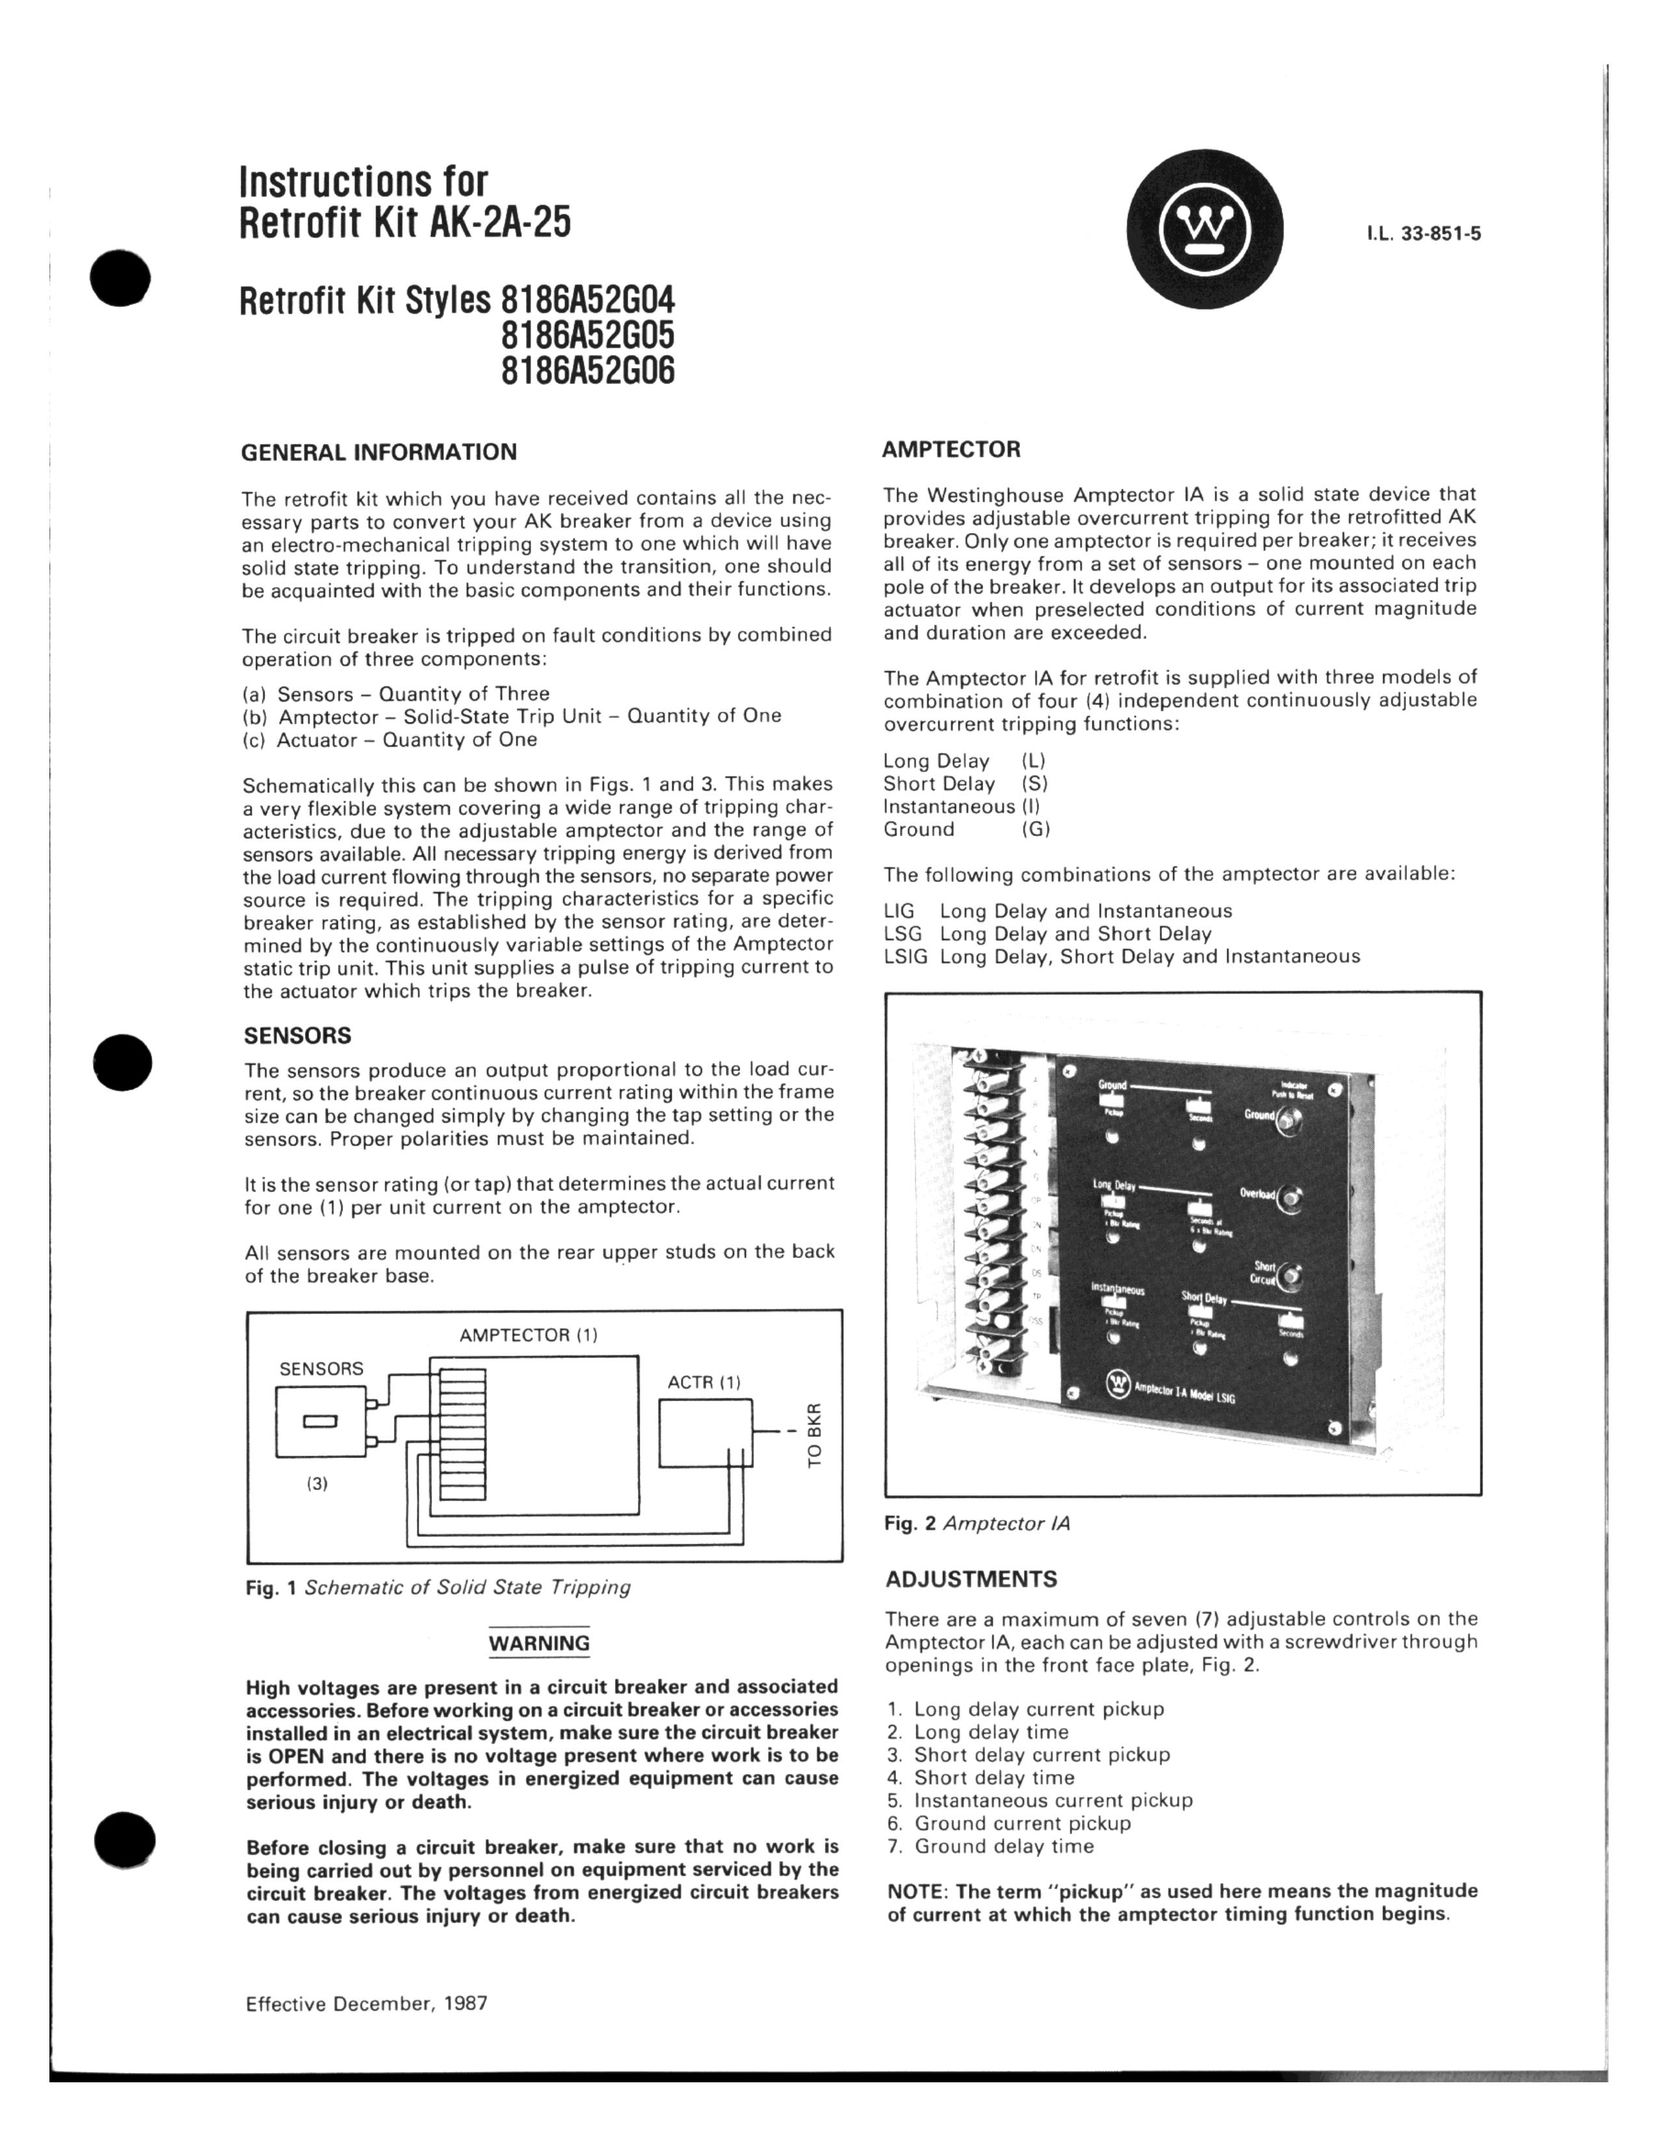 Westinghouse AK-2A-25 Door User Manual